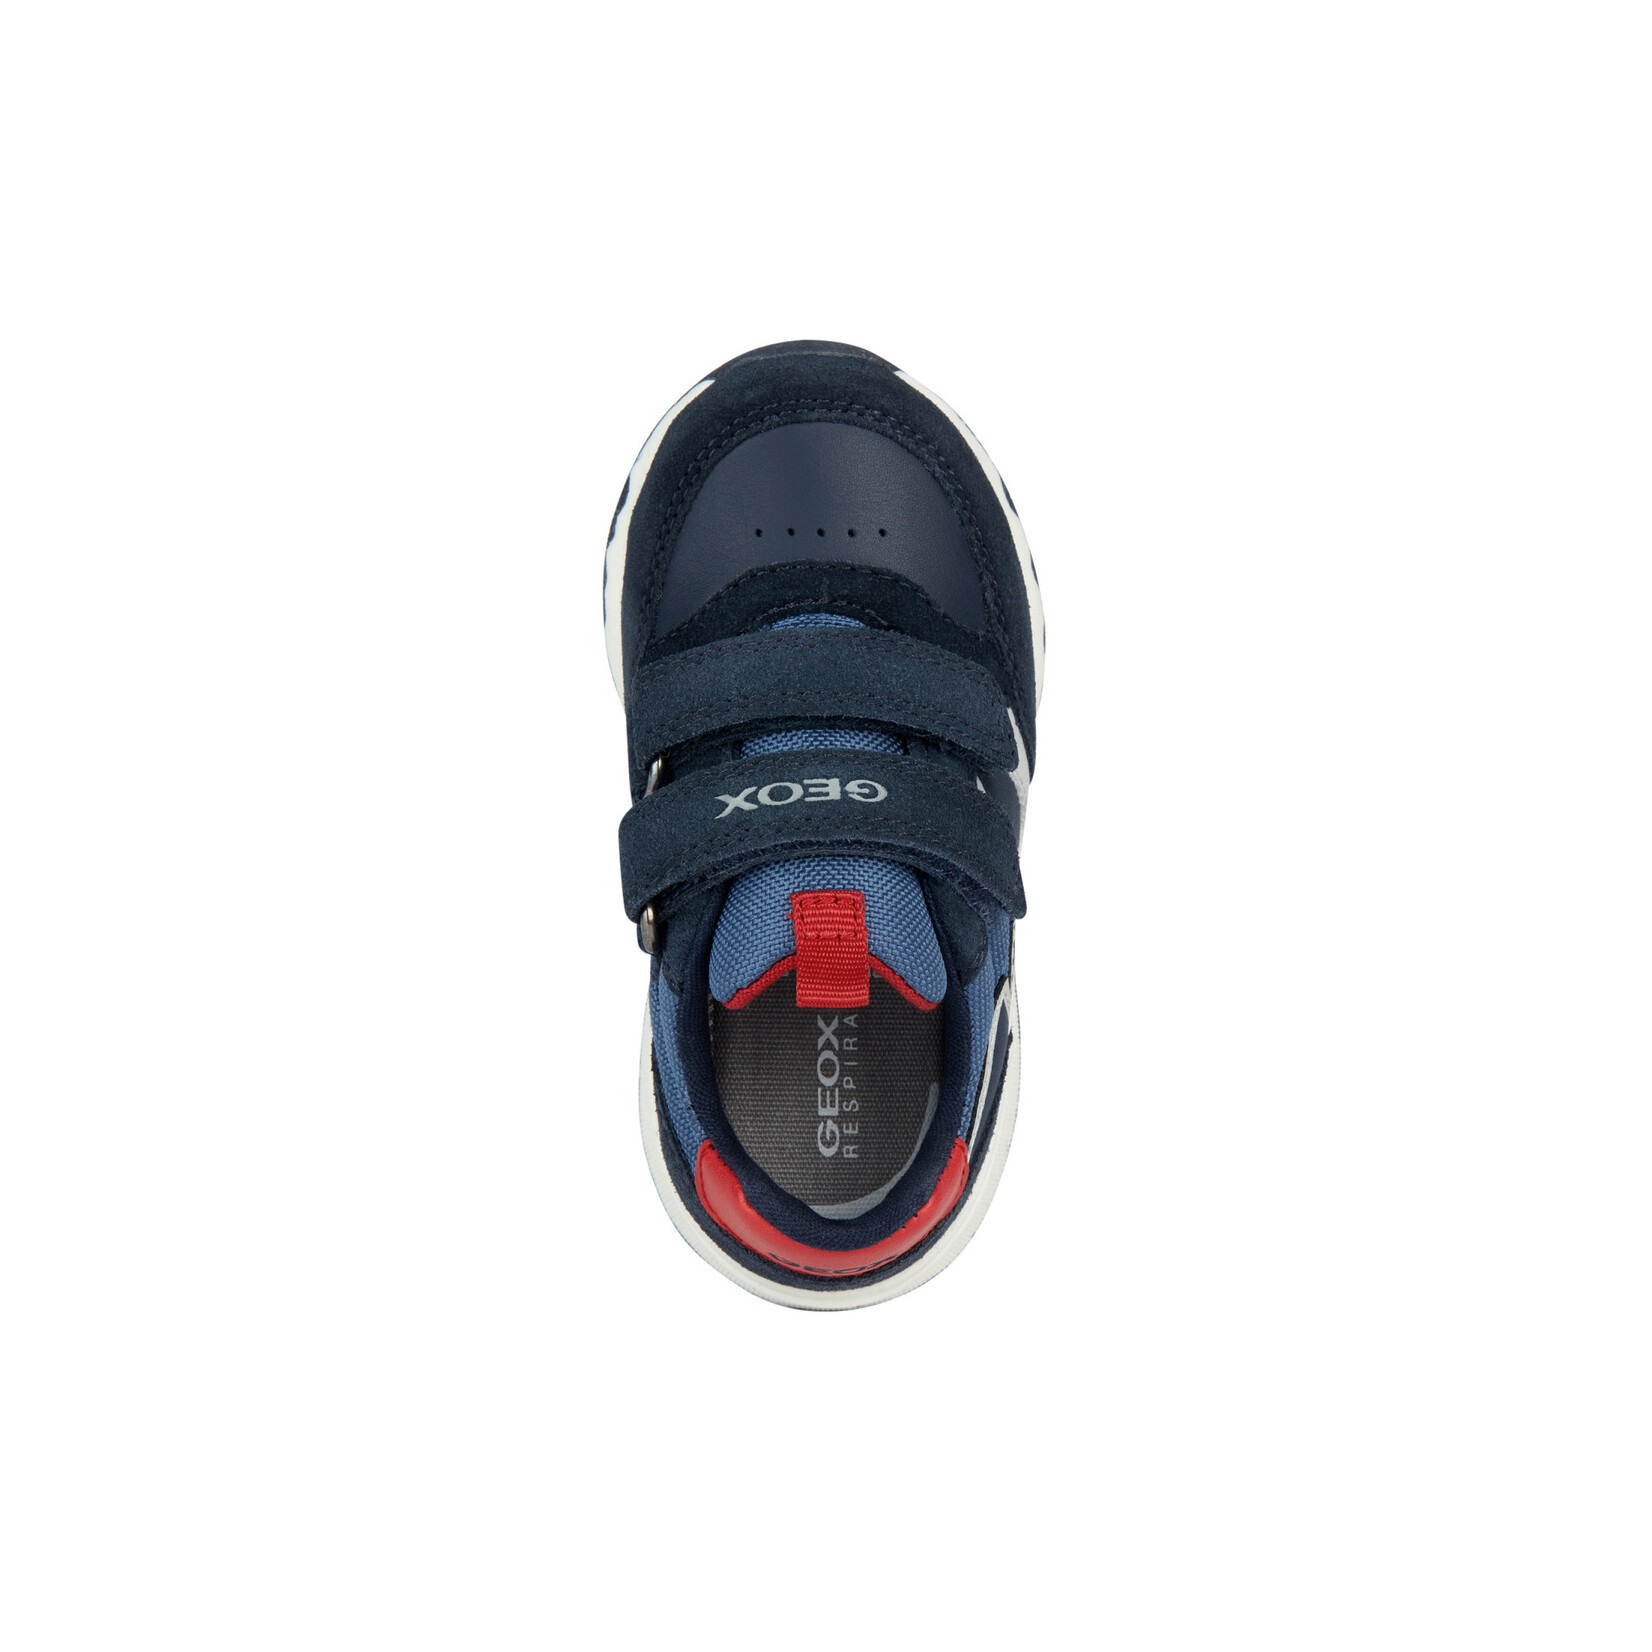 Geox GEOX - Chaussures de sport 'B. PYRIP - Suede+Cuir Synt.' - Marine/Rouge